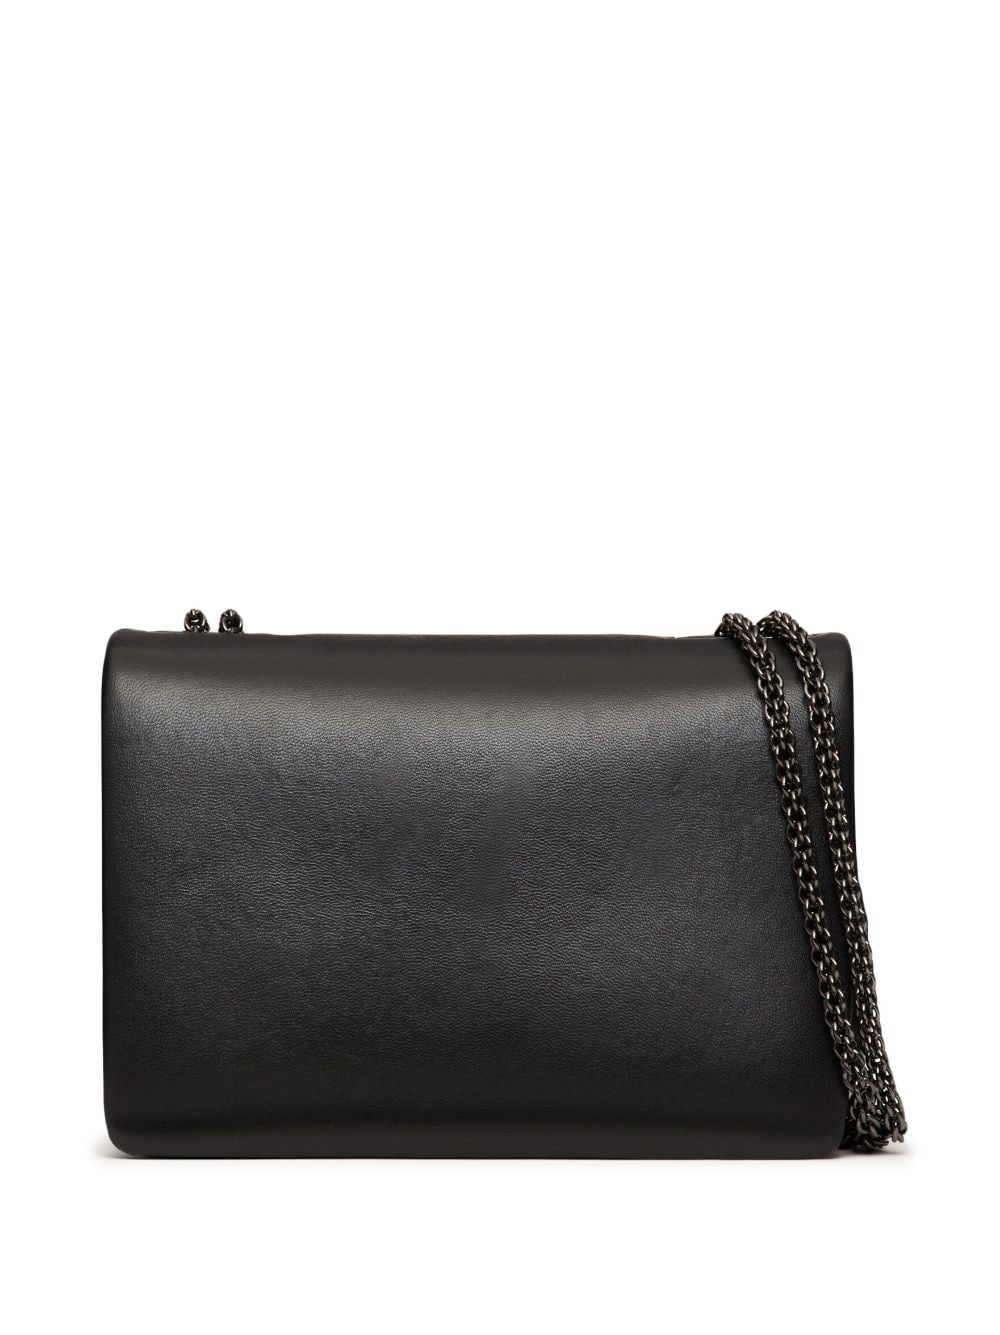 VALENTINO GARAVANI Women's Elegant Black Lambskin Leather Mini Shoulder Bag, FW23